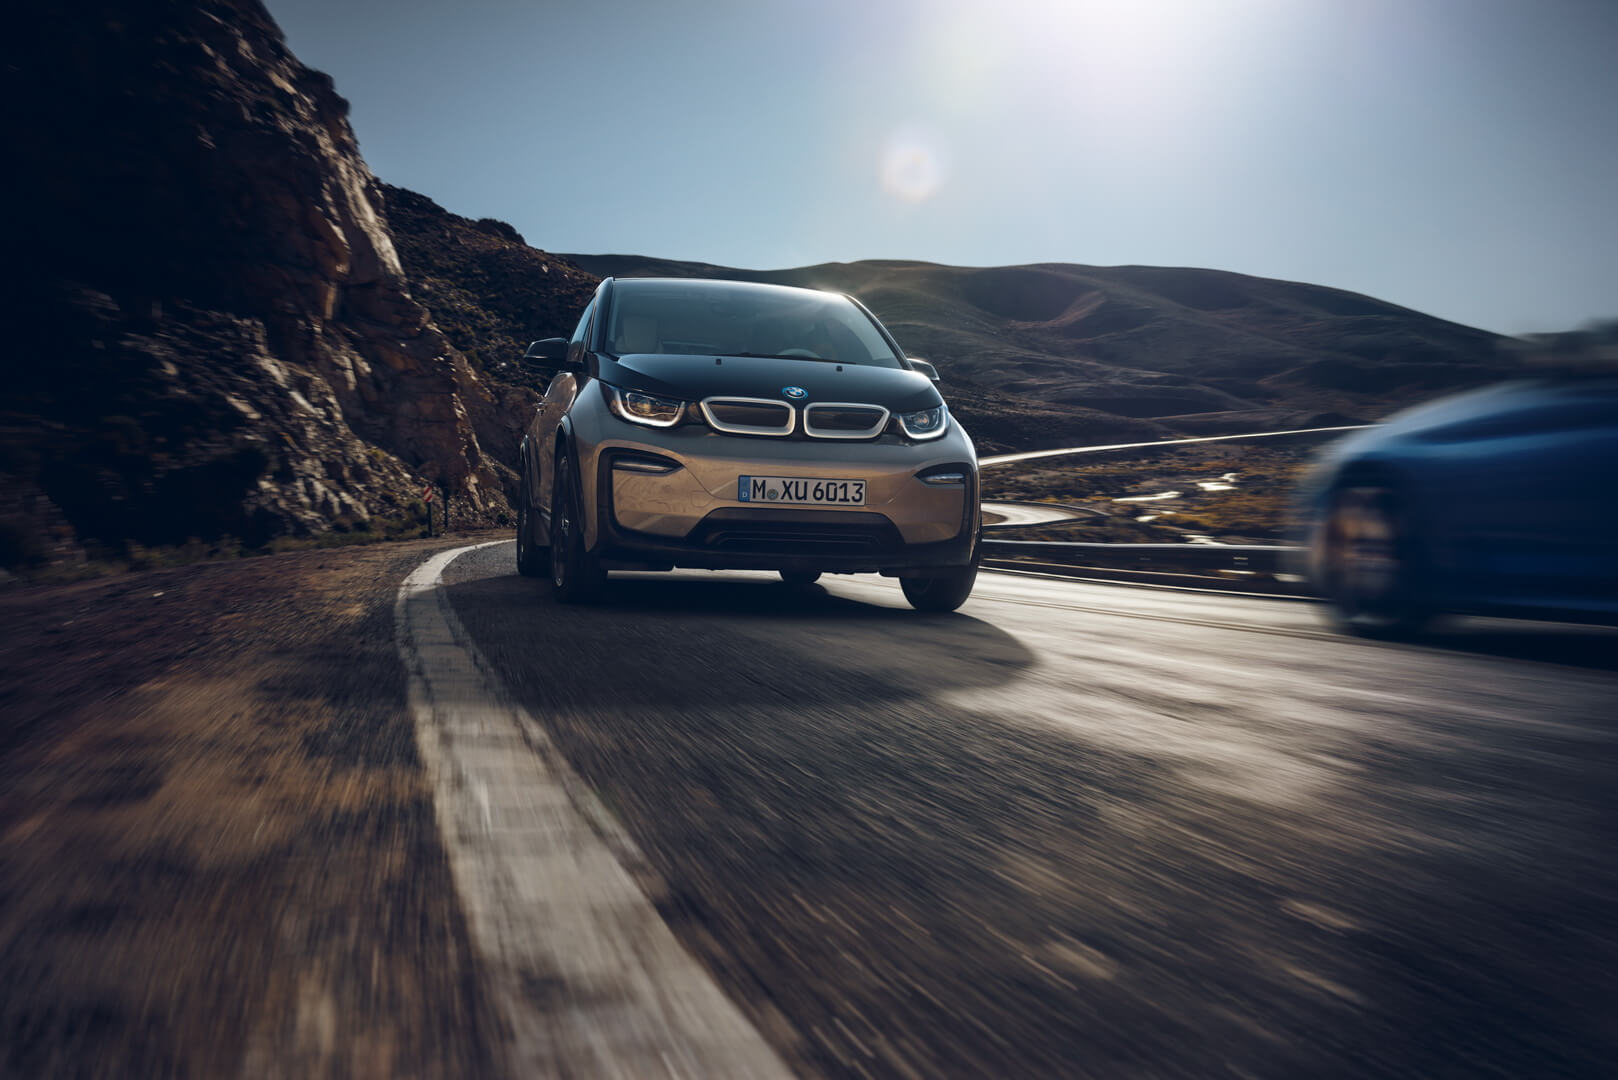 Фотография экоавто BMW i3s 2019 (42.2 кВт•ч) - фото 19